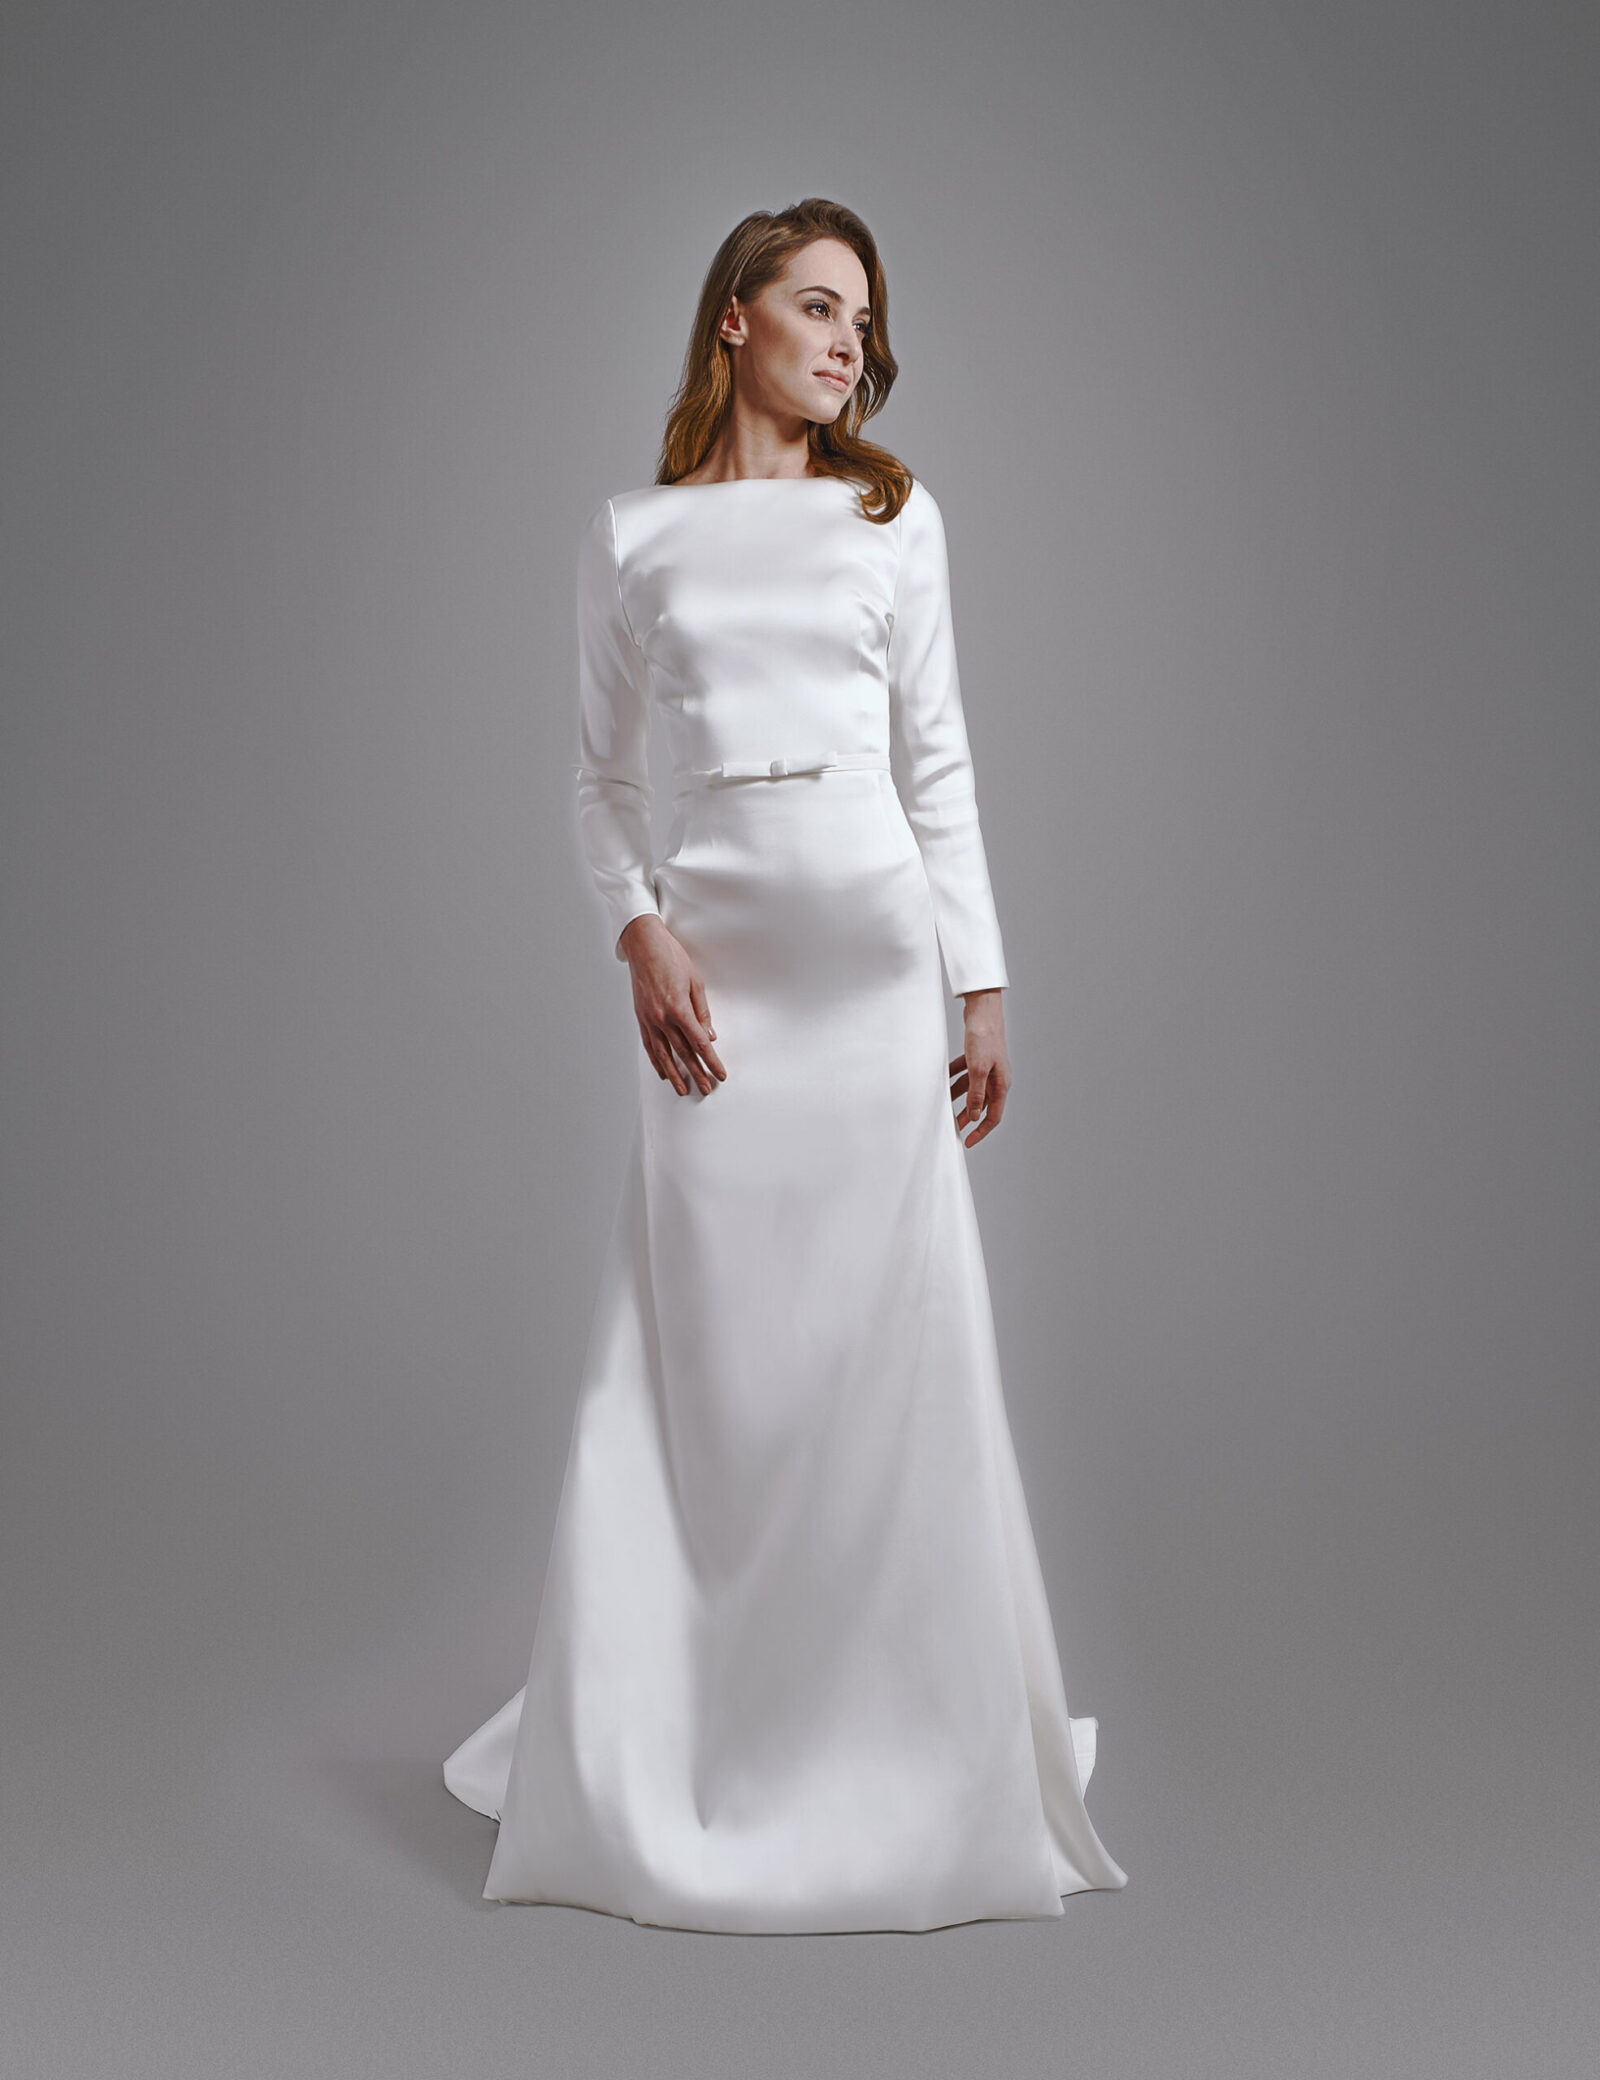 Simple elegant minimal wedding dress BHARB-MAIDEN-BH2020-0015-002-tall